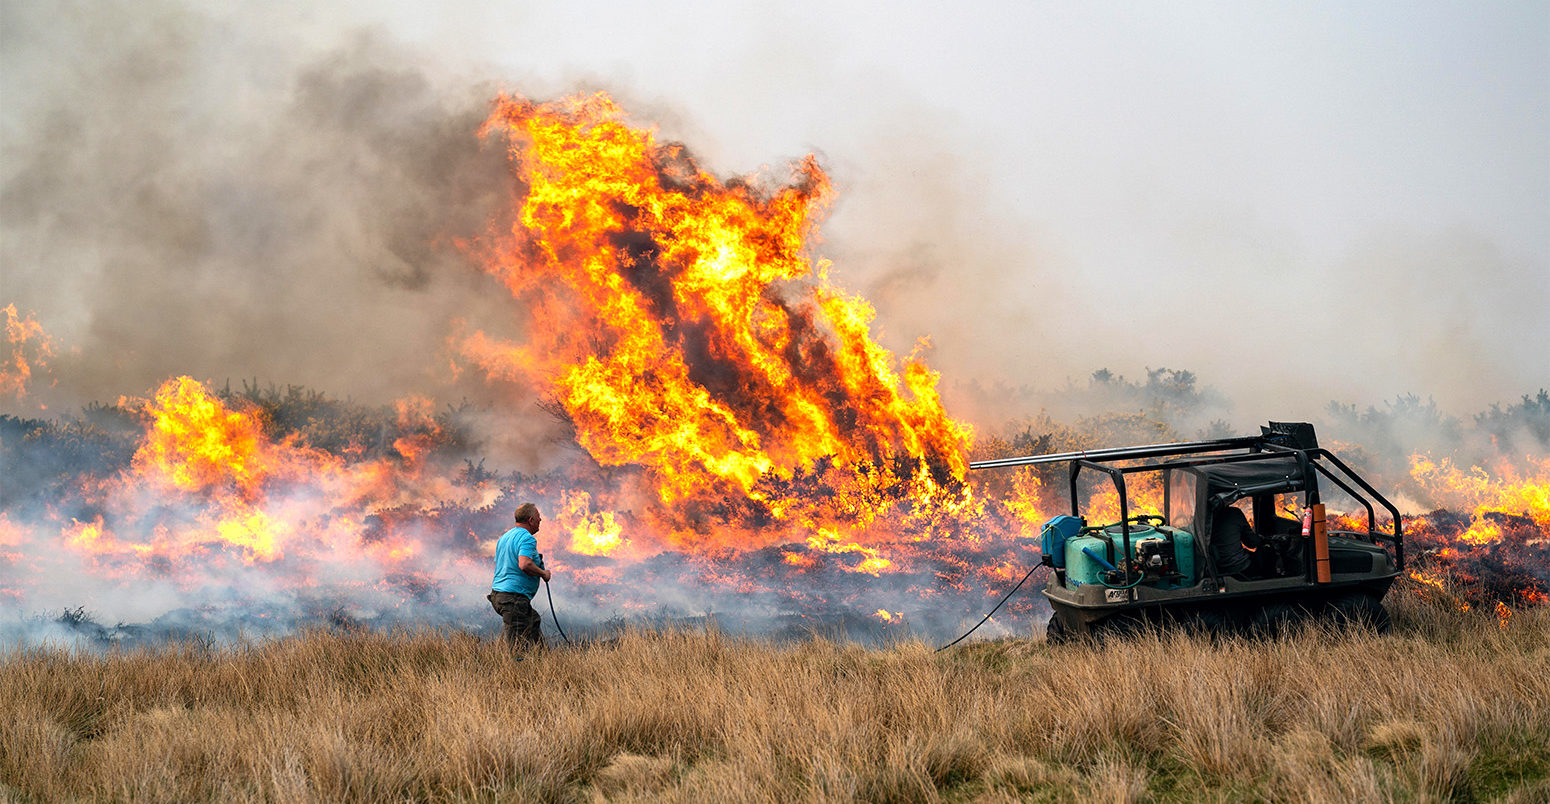 Wildfire in Moray, Scotland, 23 April 2019. Credit: JASPERIMAGE / Alamy Stock Photo.